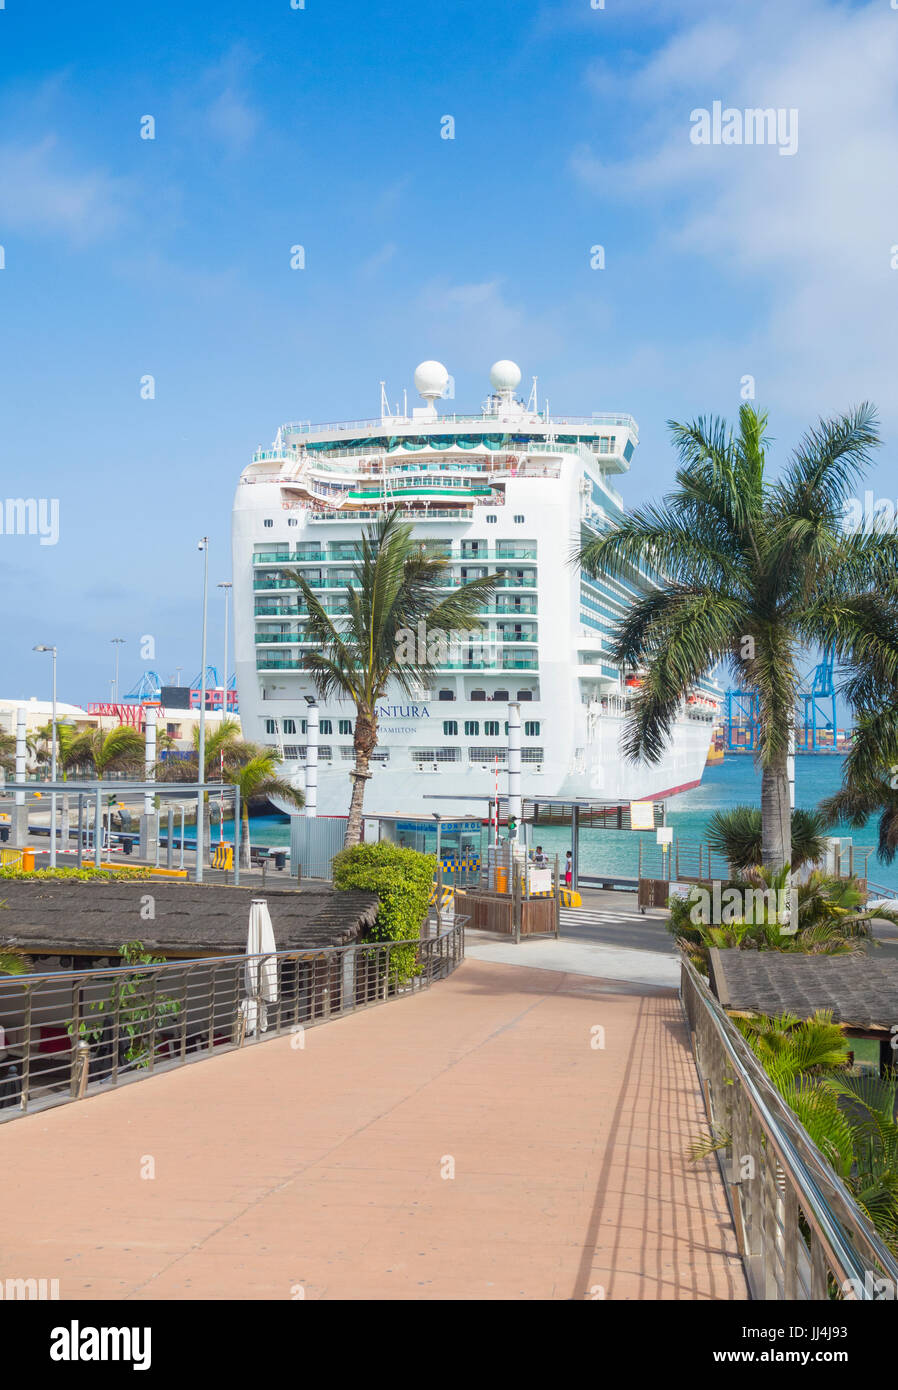 P&O cruise ship Ventura in Las Palmas port on Gran Canaria, Canary Islands, Spain Stock Photo